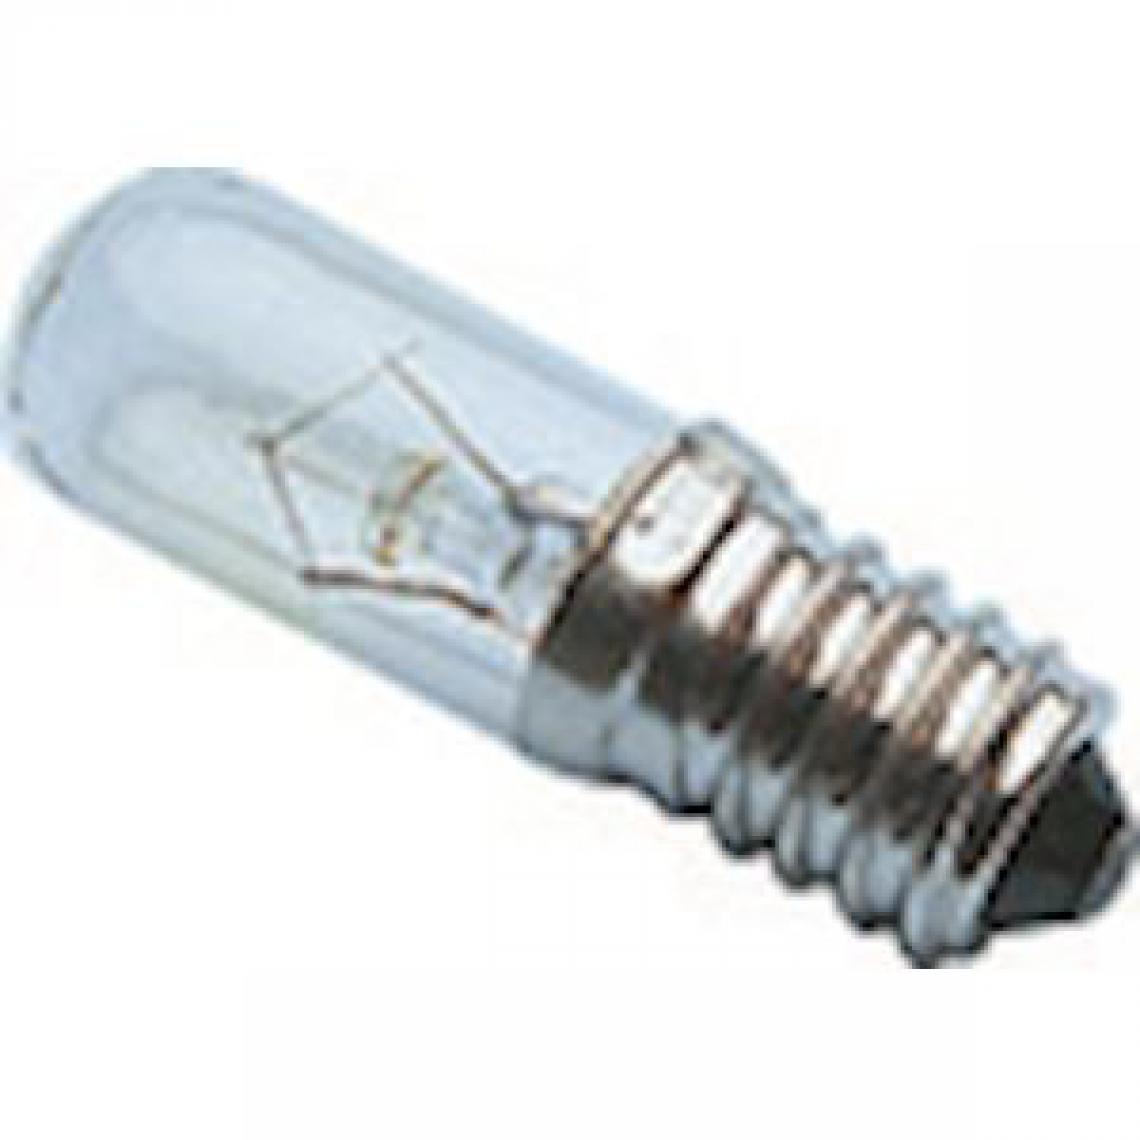 Orbitec - lampe miniature - e14 - 16 x 54 - 24 volts - 25 watts - orbitec 118409 - Ampoules LED